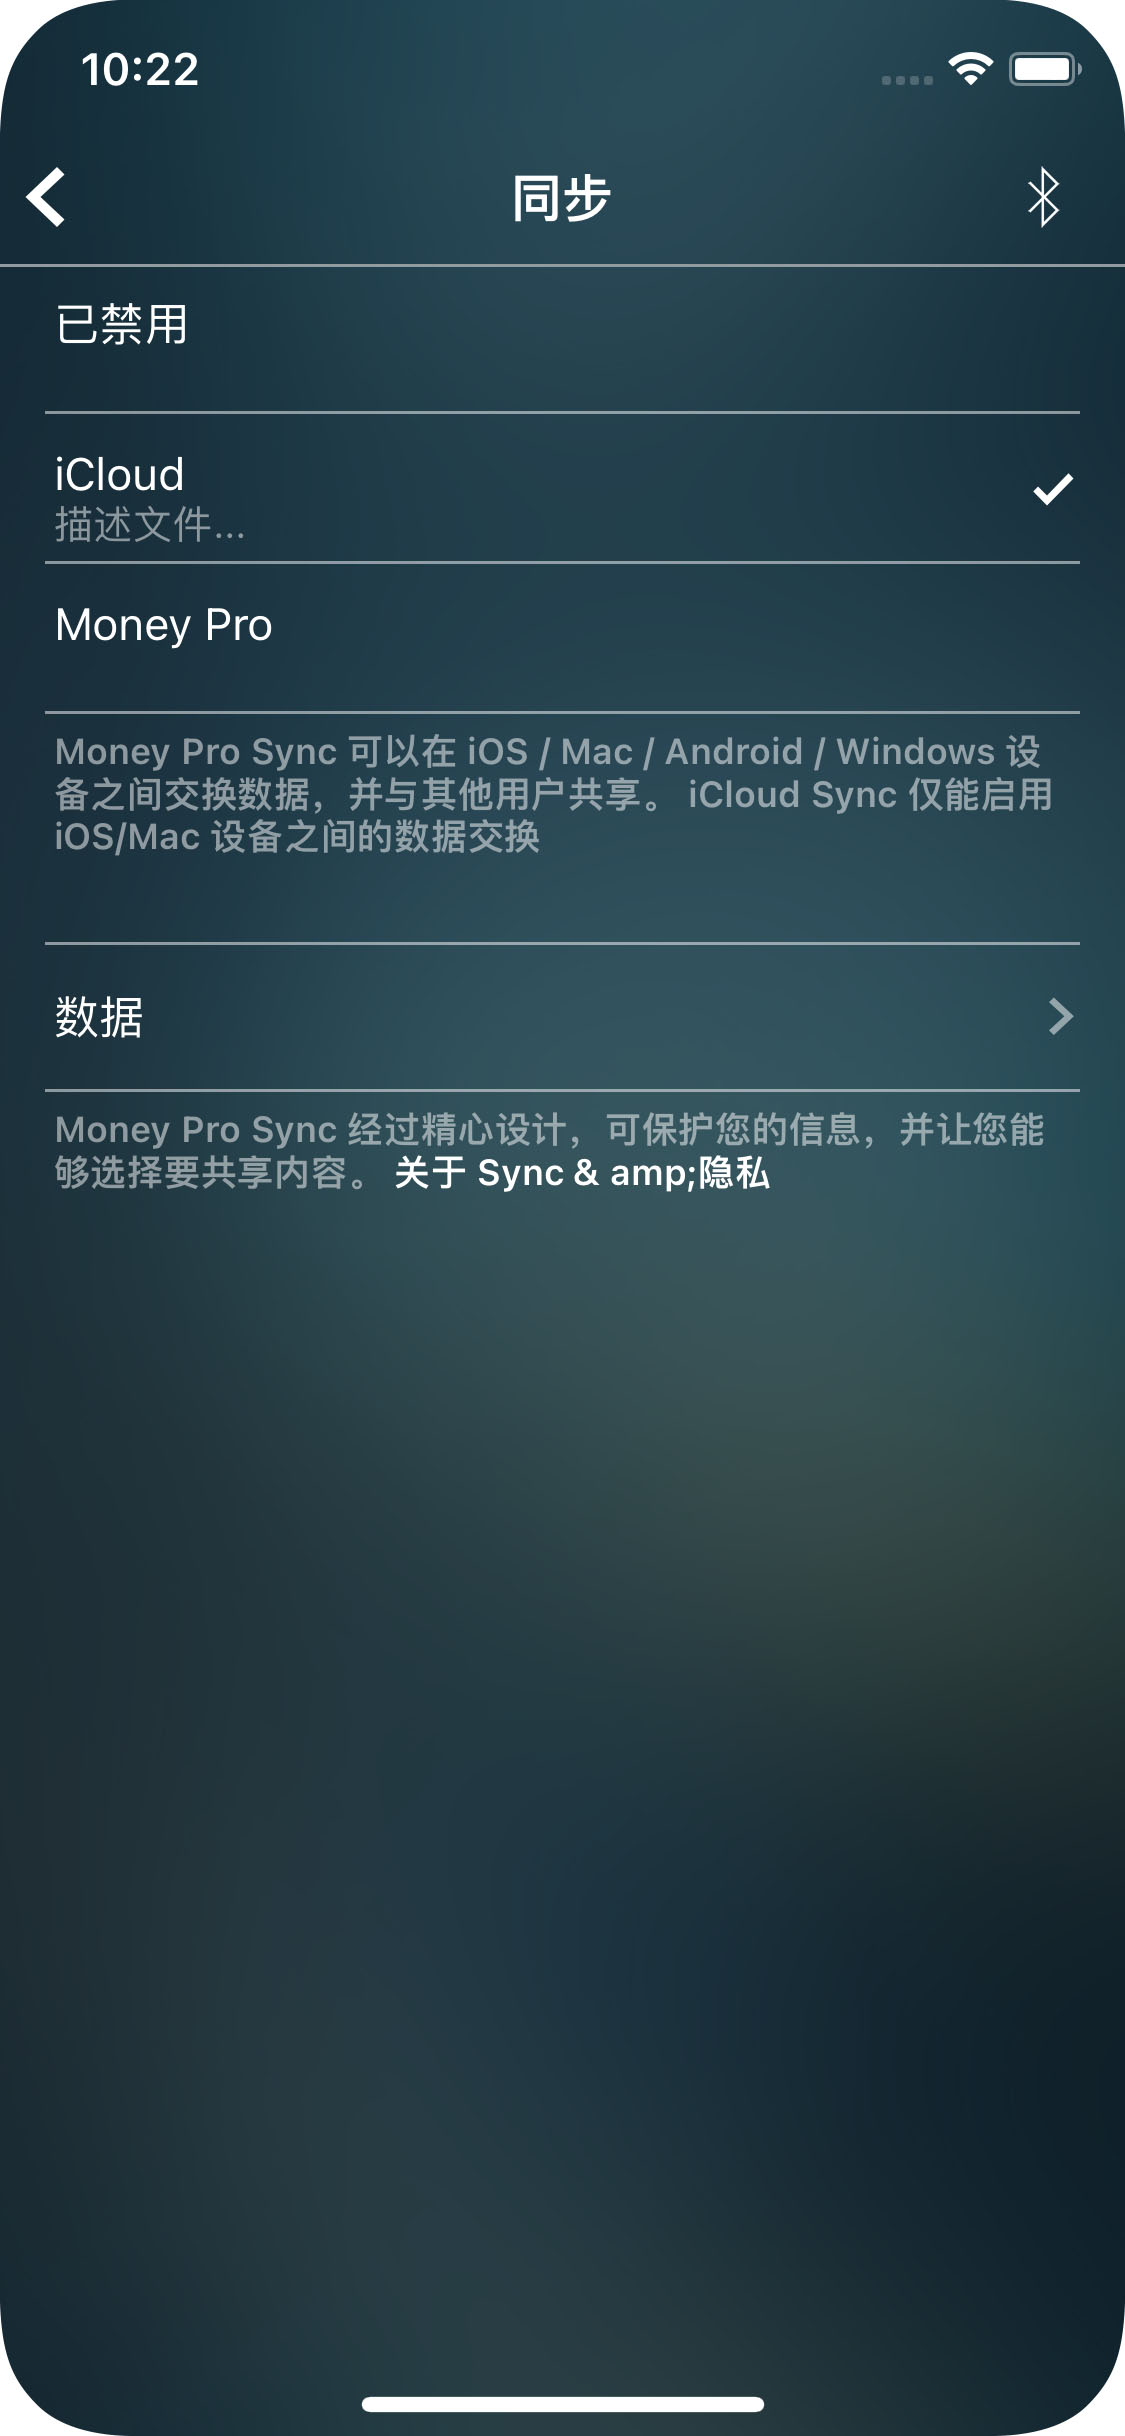 Money Pro - iCloud同步 (iOS, Mac) - iPhone